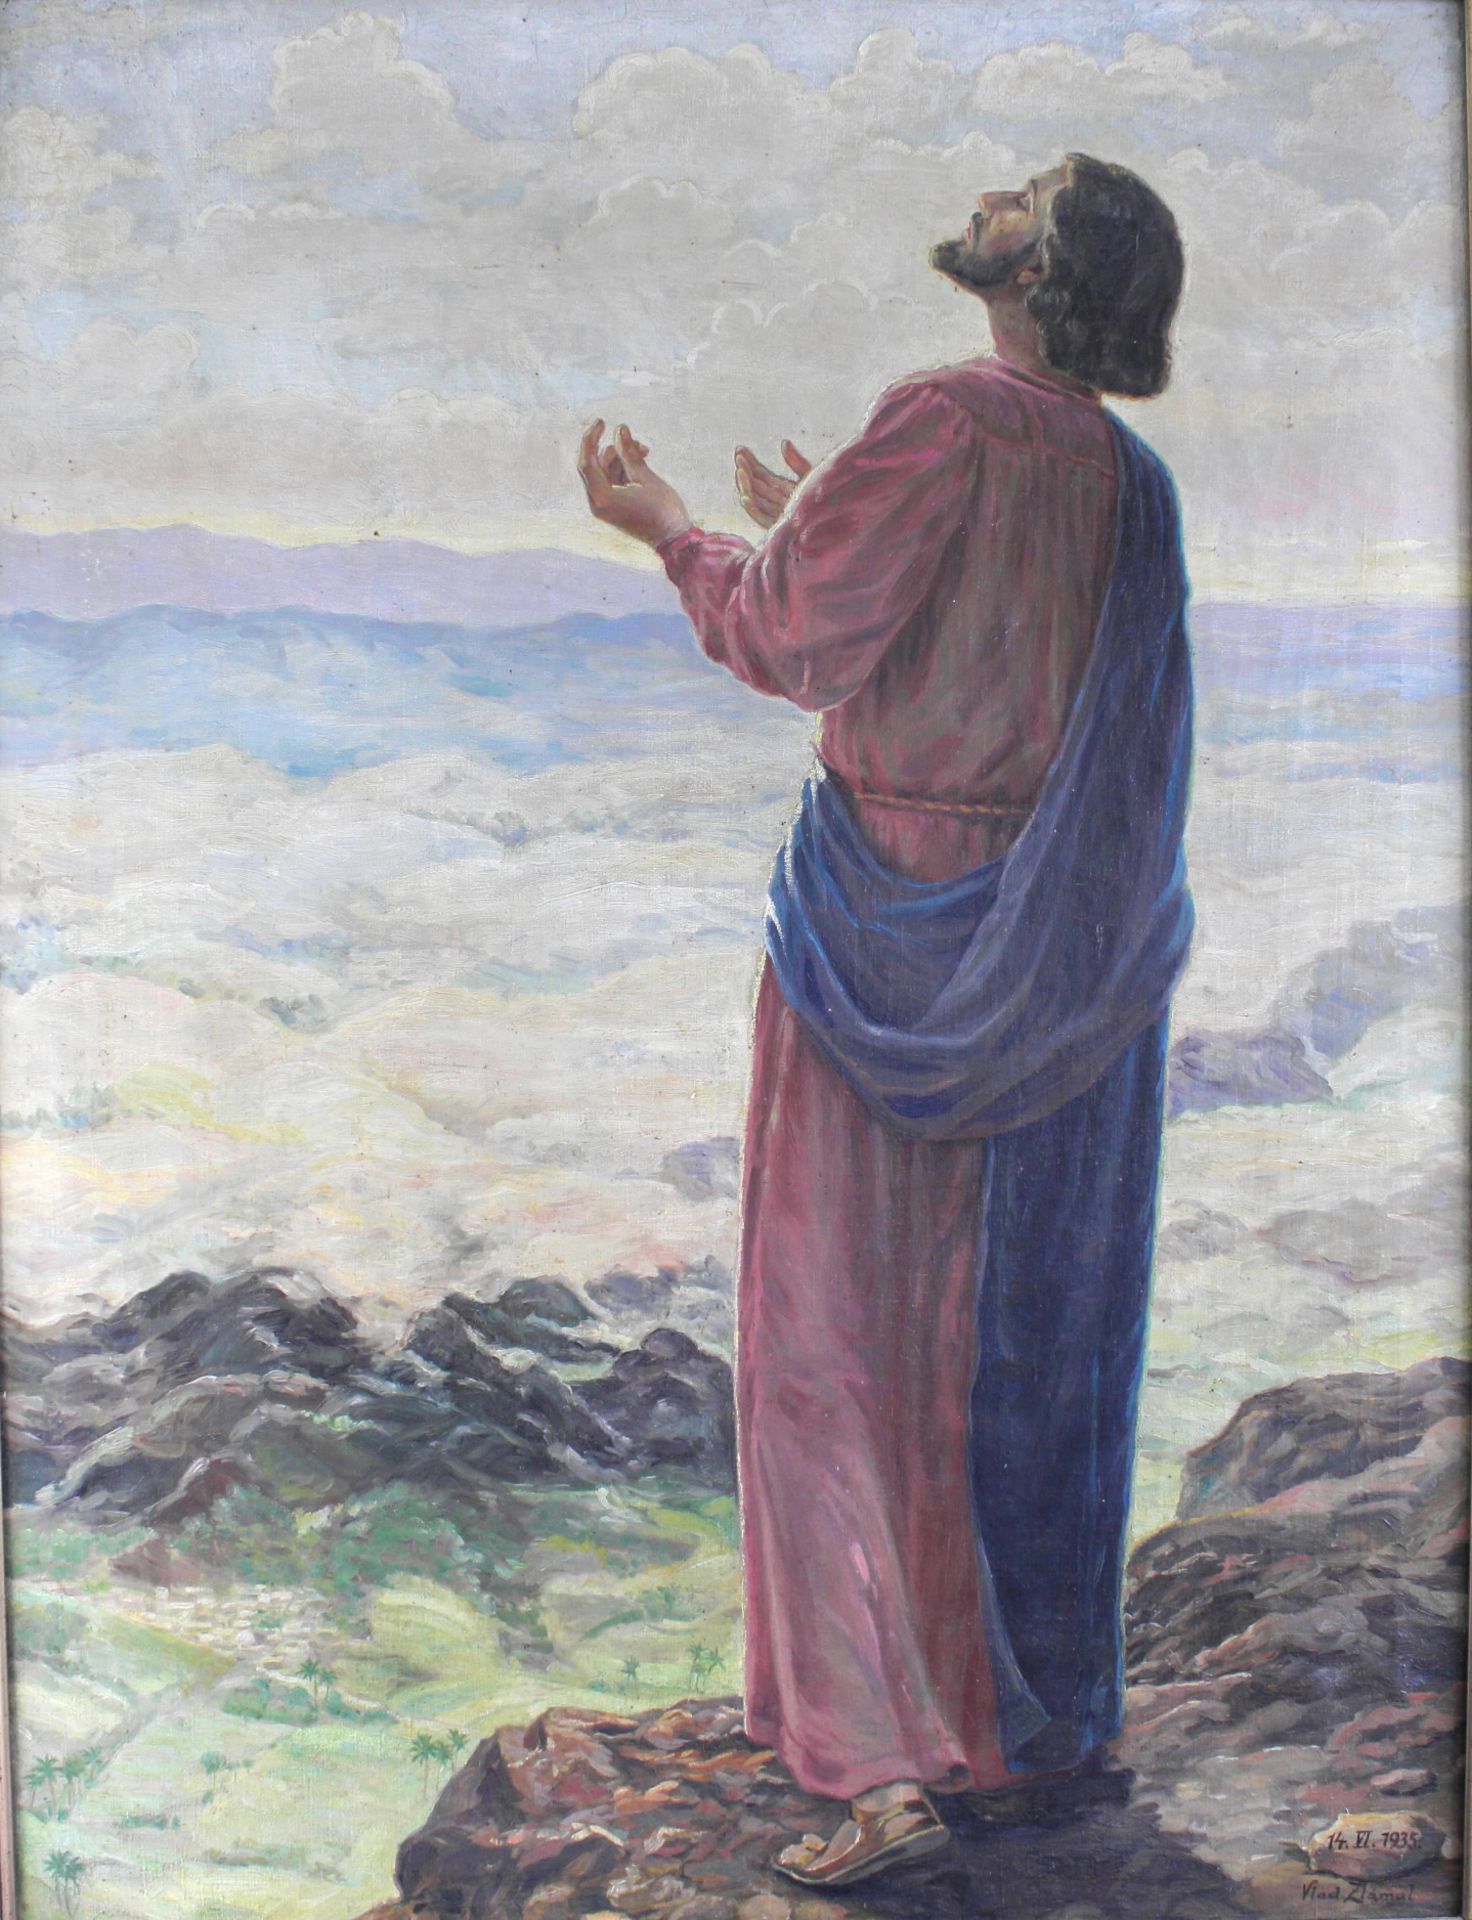 Vladimir Zlamal, Tschechei 20.Jh. "Jesus auf dem Berg" Öl/Leinwand, sig. u. dat. 1935, 106 x 80 cm - Bild 2 aus 5